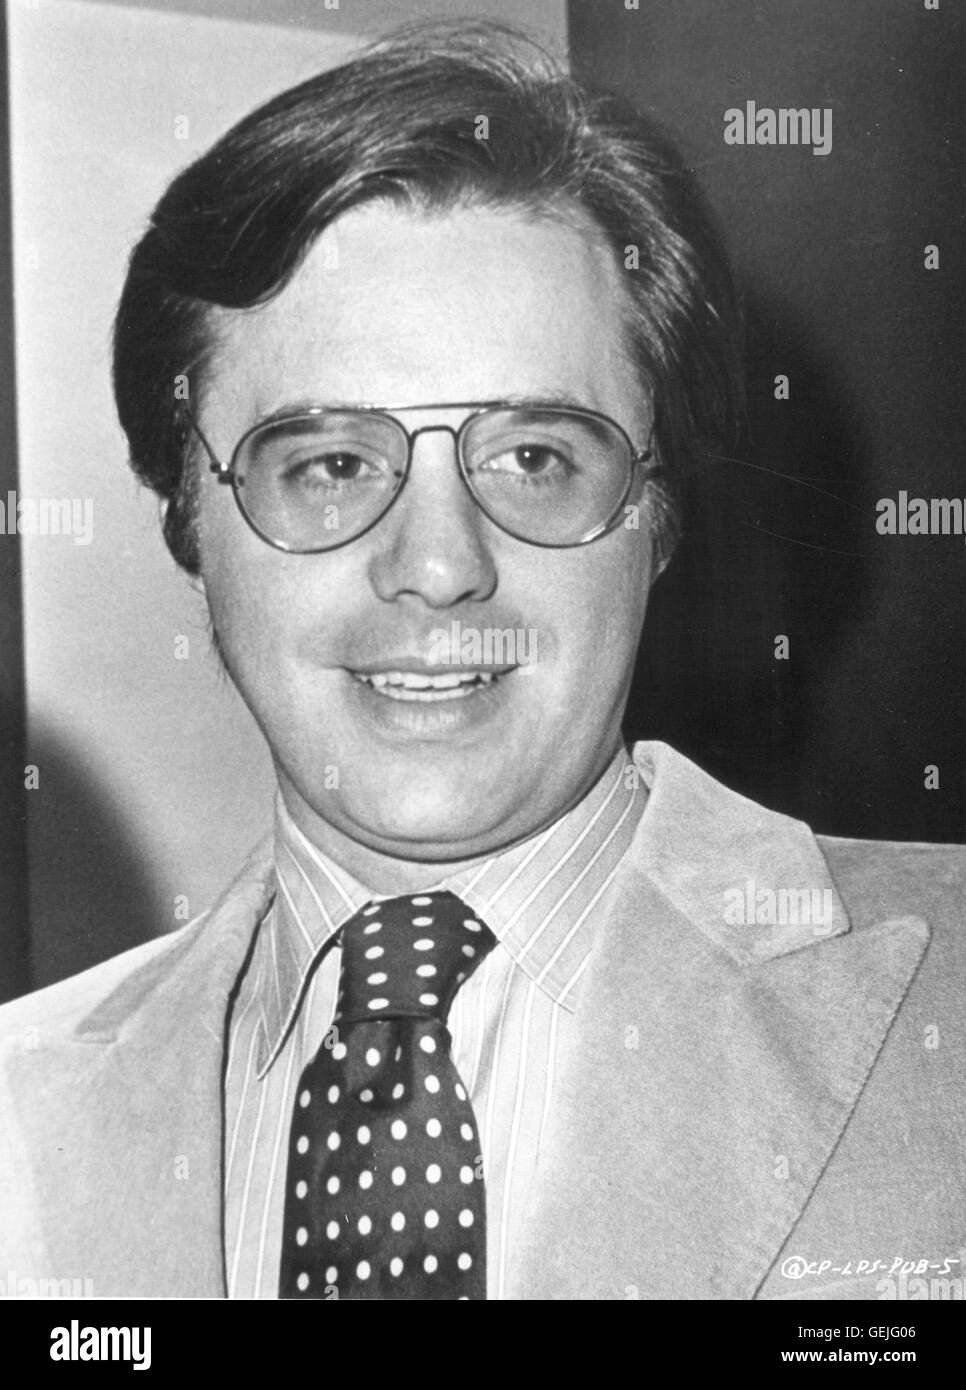 Regisseur Peter Bogdanovich, Portrait, ca. 1976., 1970er, 1970s, American, Brille, Portrait, Regisseur, director, glasses, Peter Bogdanovich Stock Photo